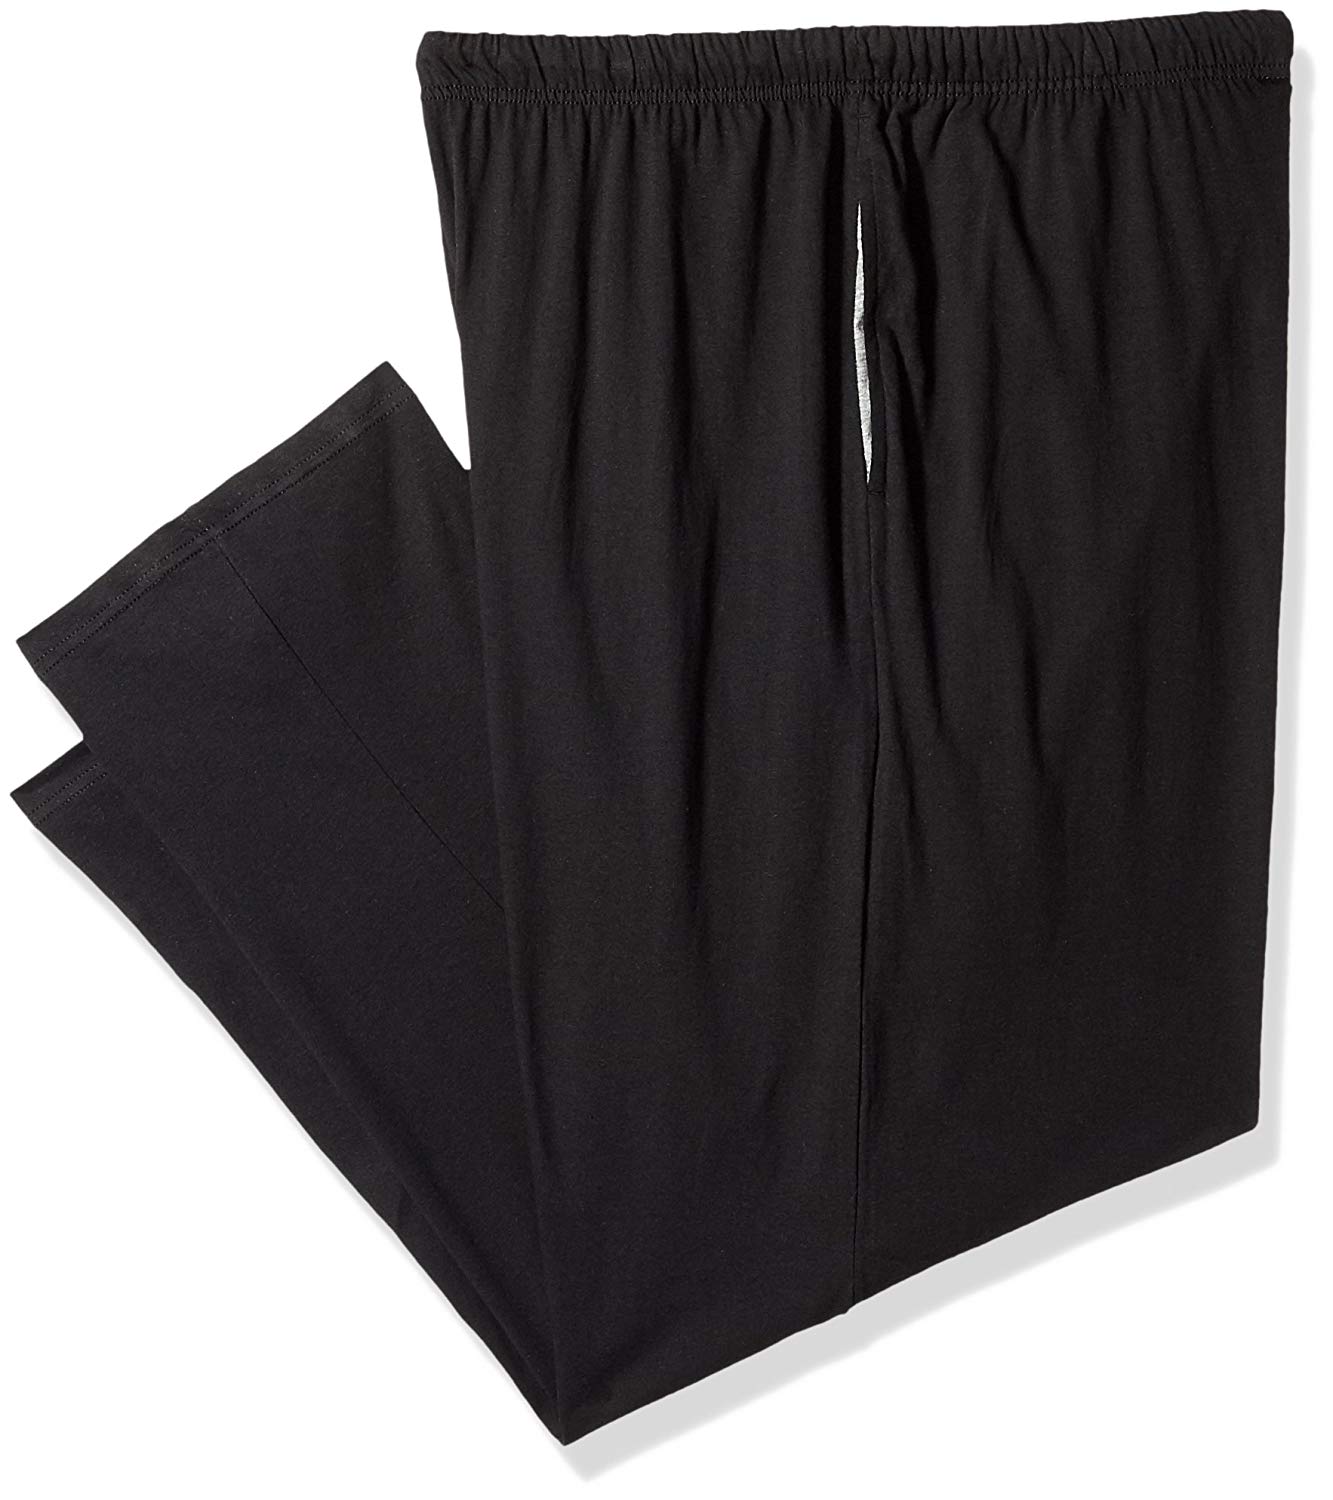 Big Men's Solid Knit Pant, Black, 5X, Black, Size 4.0 ZA57 | eBay